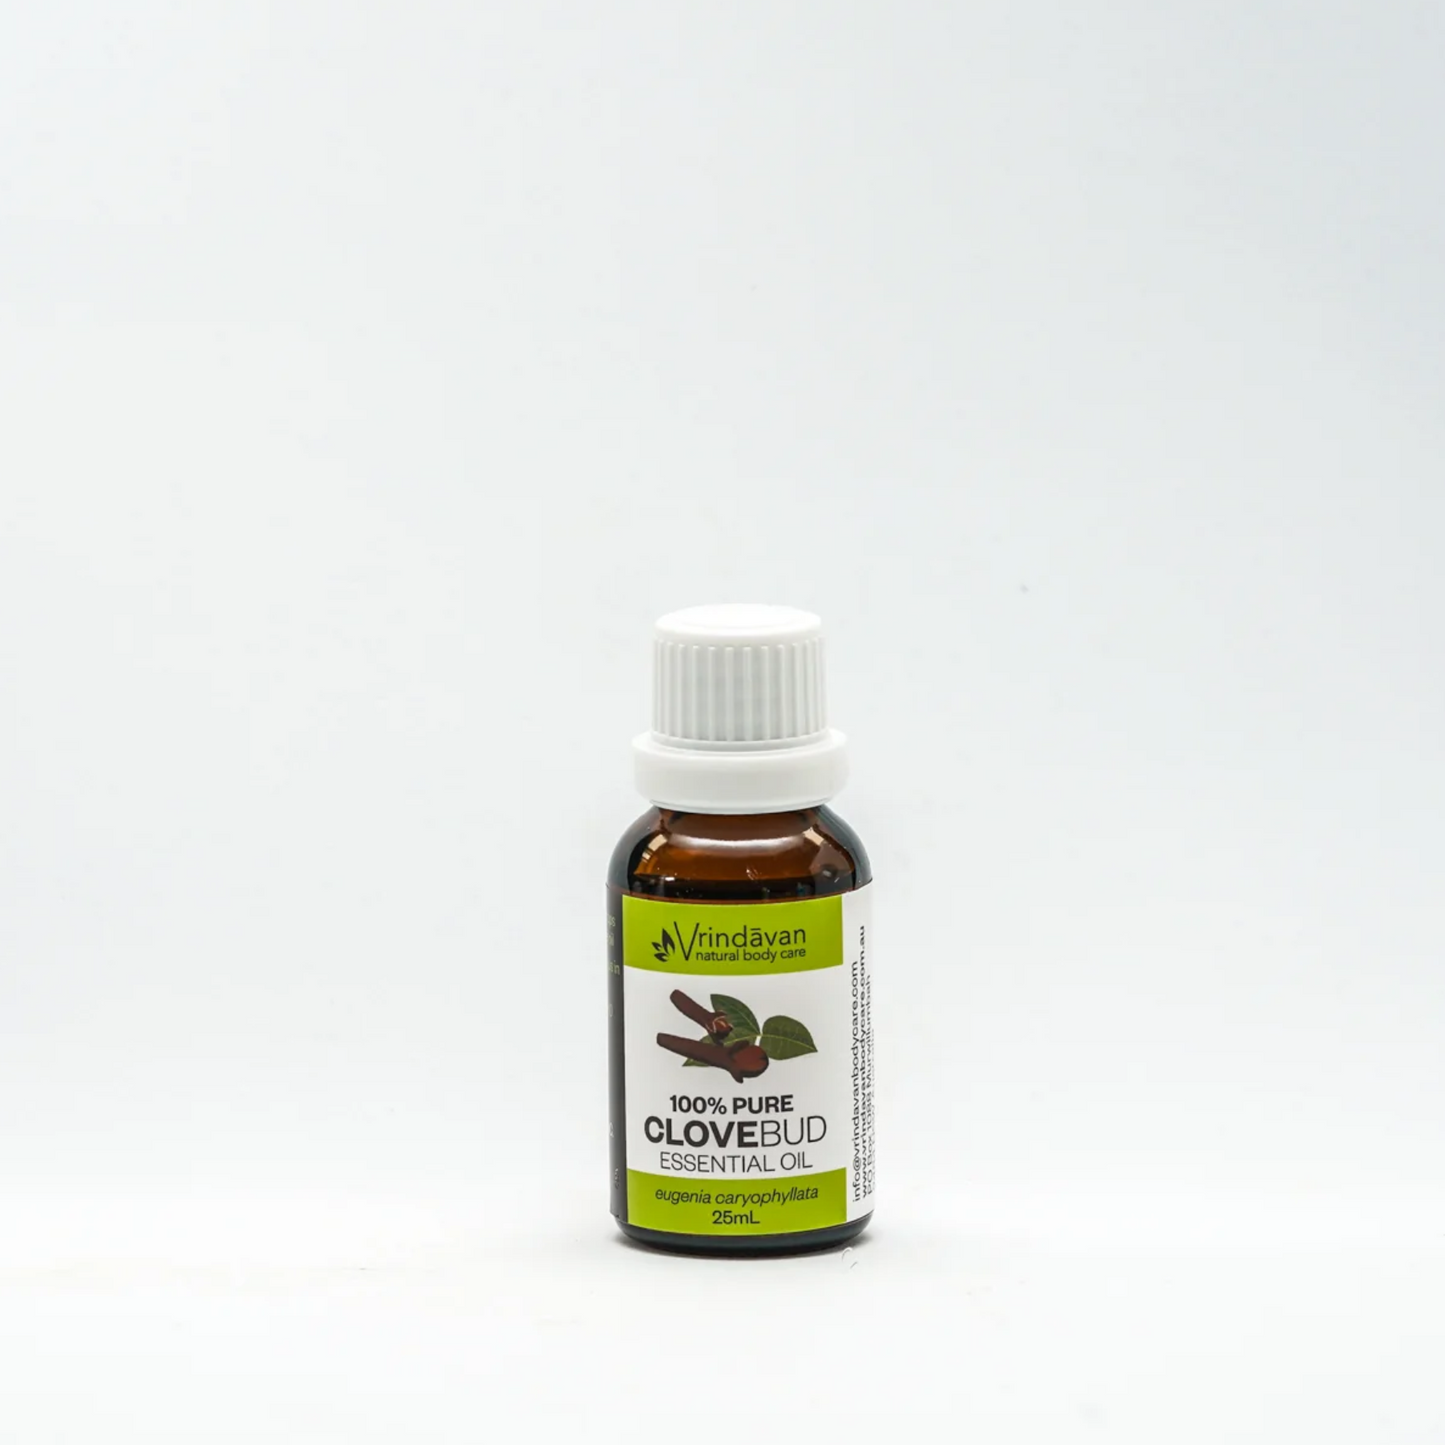 Vrindavan Essential Oil 100% Pure Clove Bud, 25ml Or 50ml